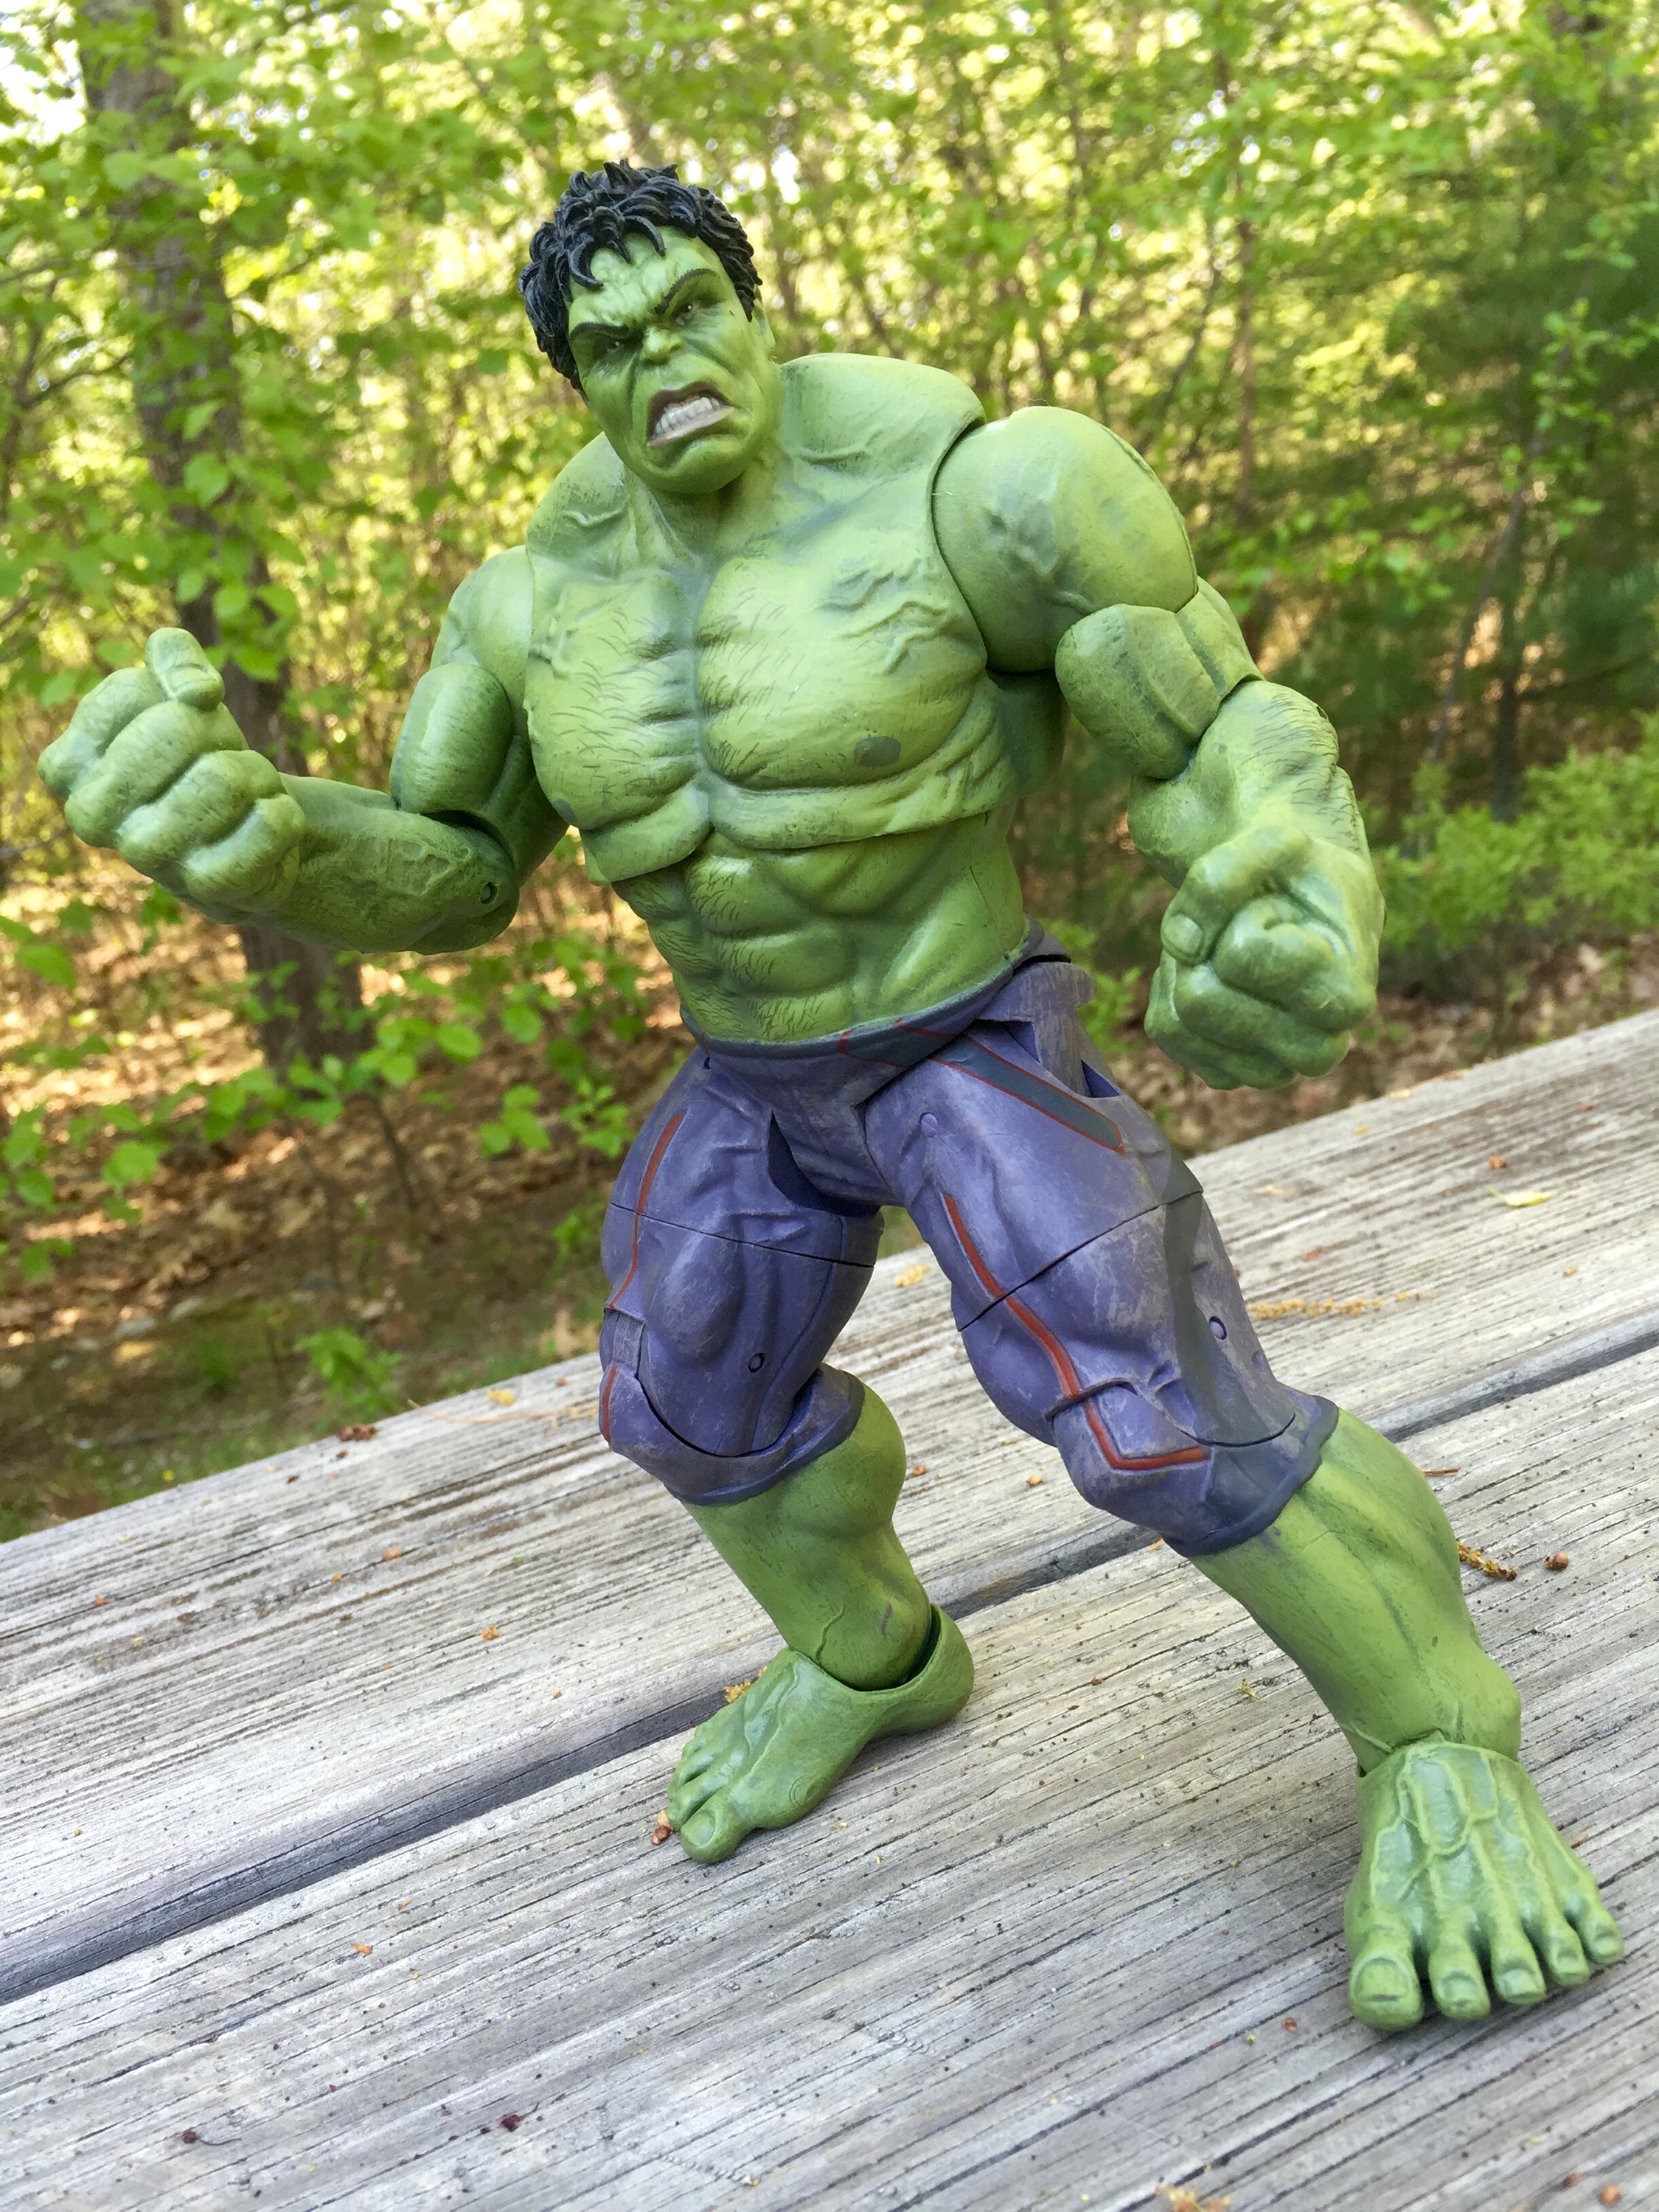 avengers age of ultron hulk toy